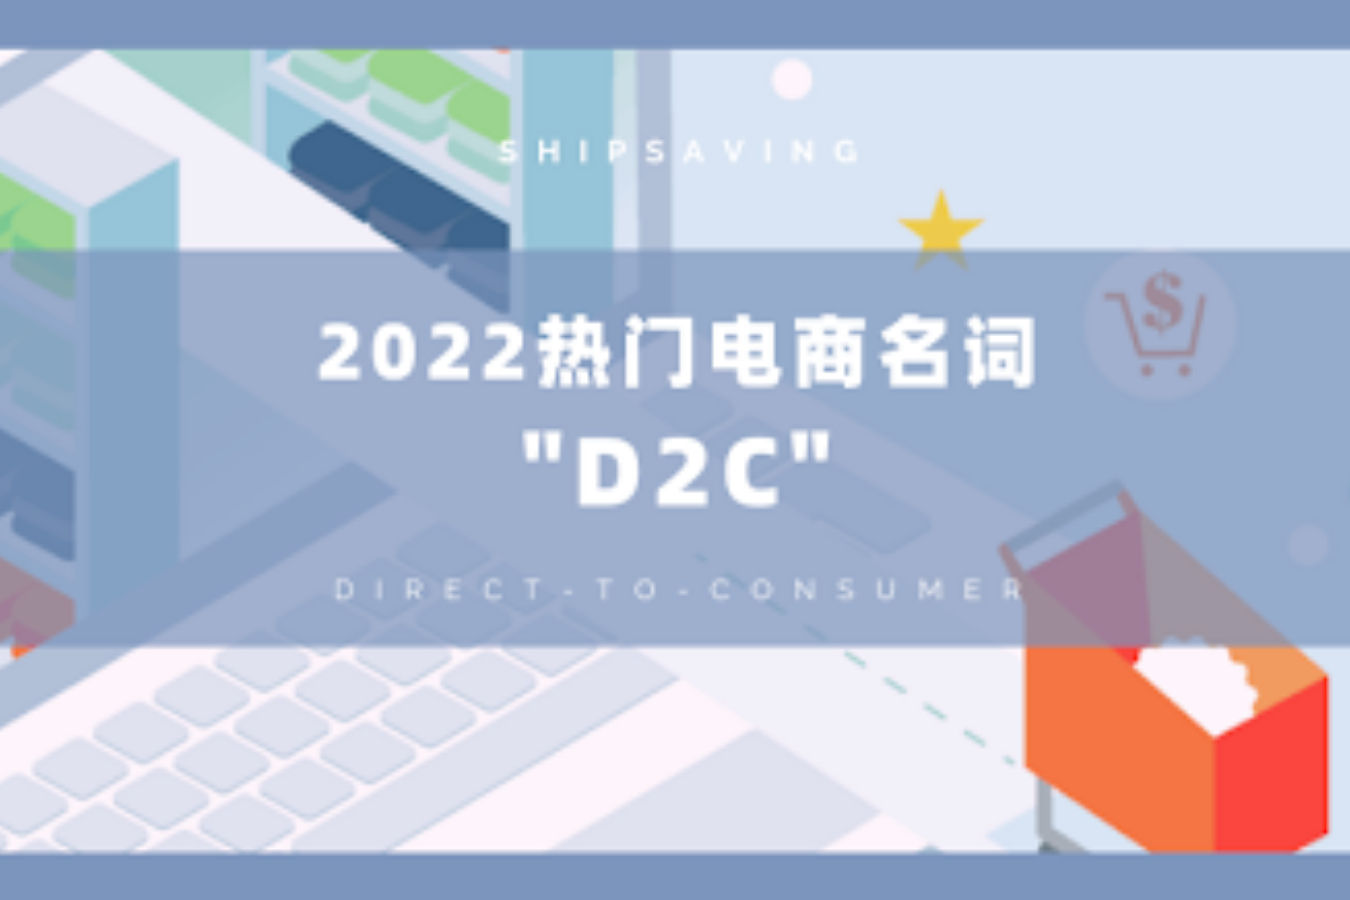 ShipSaving行业指南：D2C品牌电商时代来临